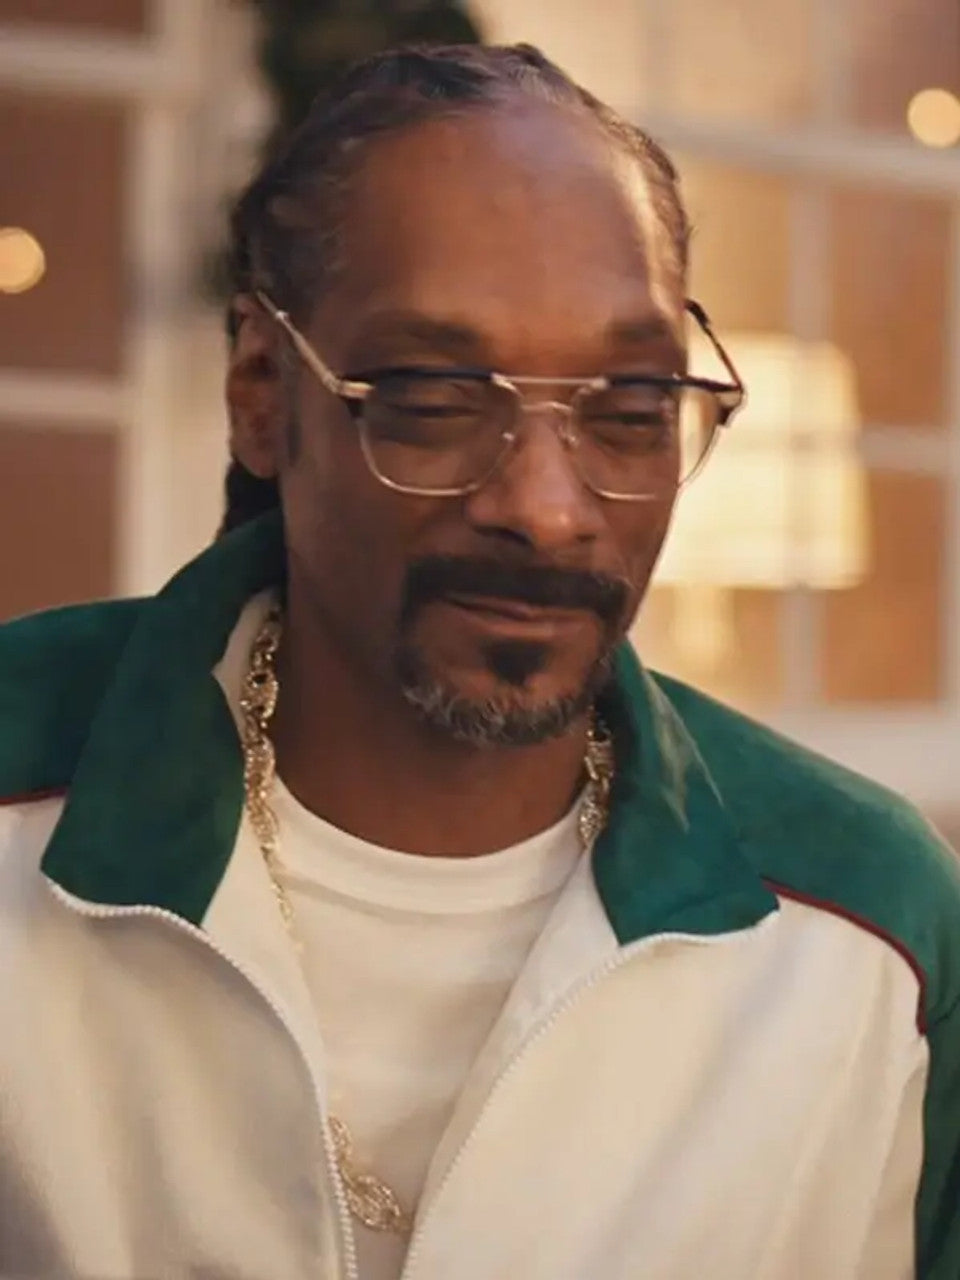 Snoop Dogg Superbowl Track Suit